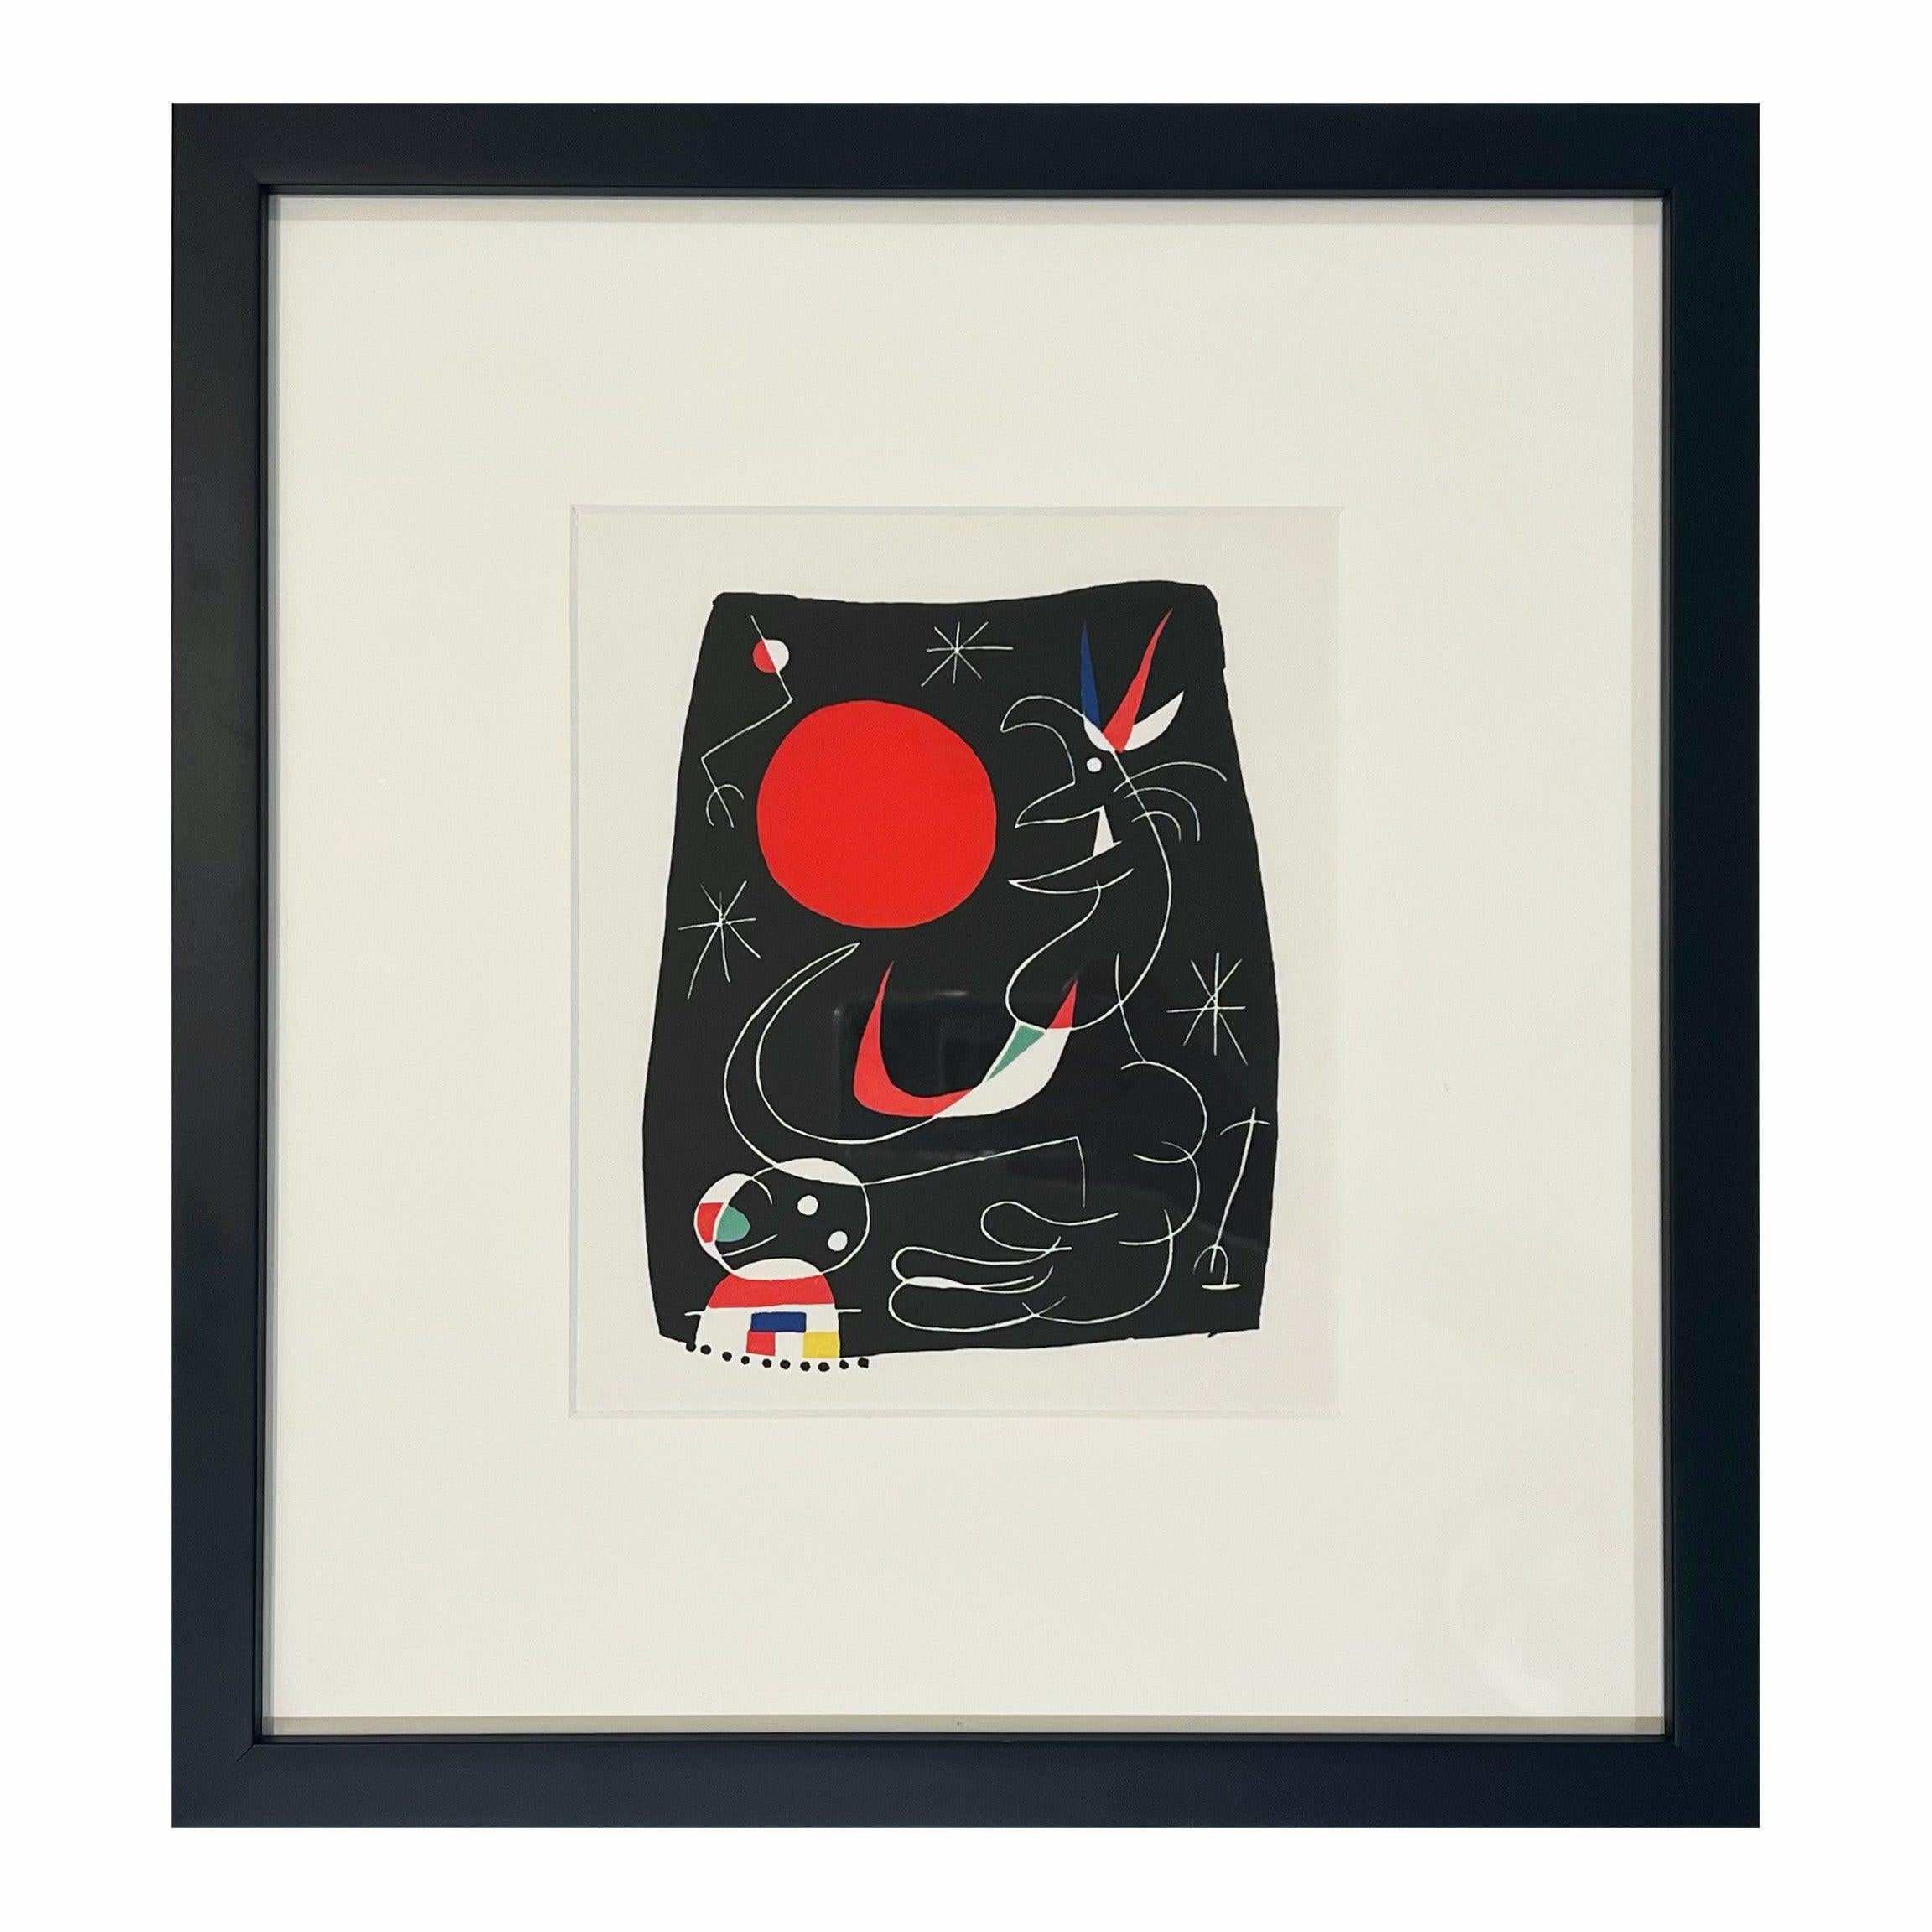 Joan Miro (Plate 4) - Print by Joan Miró